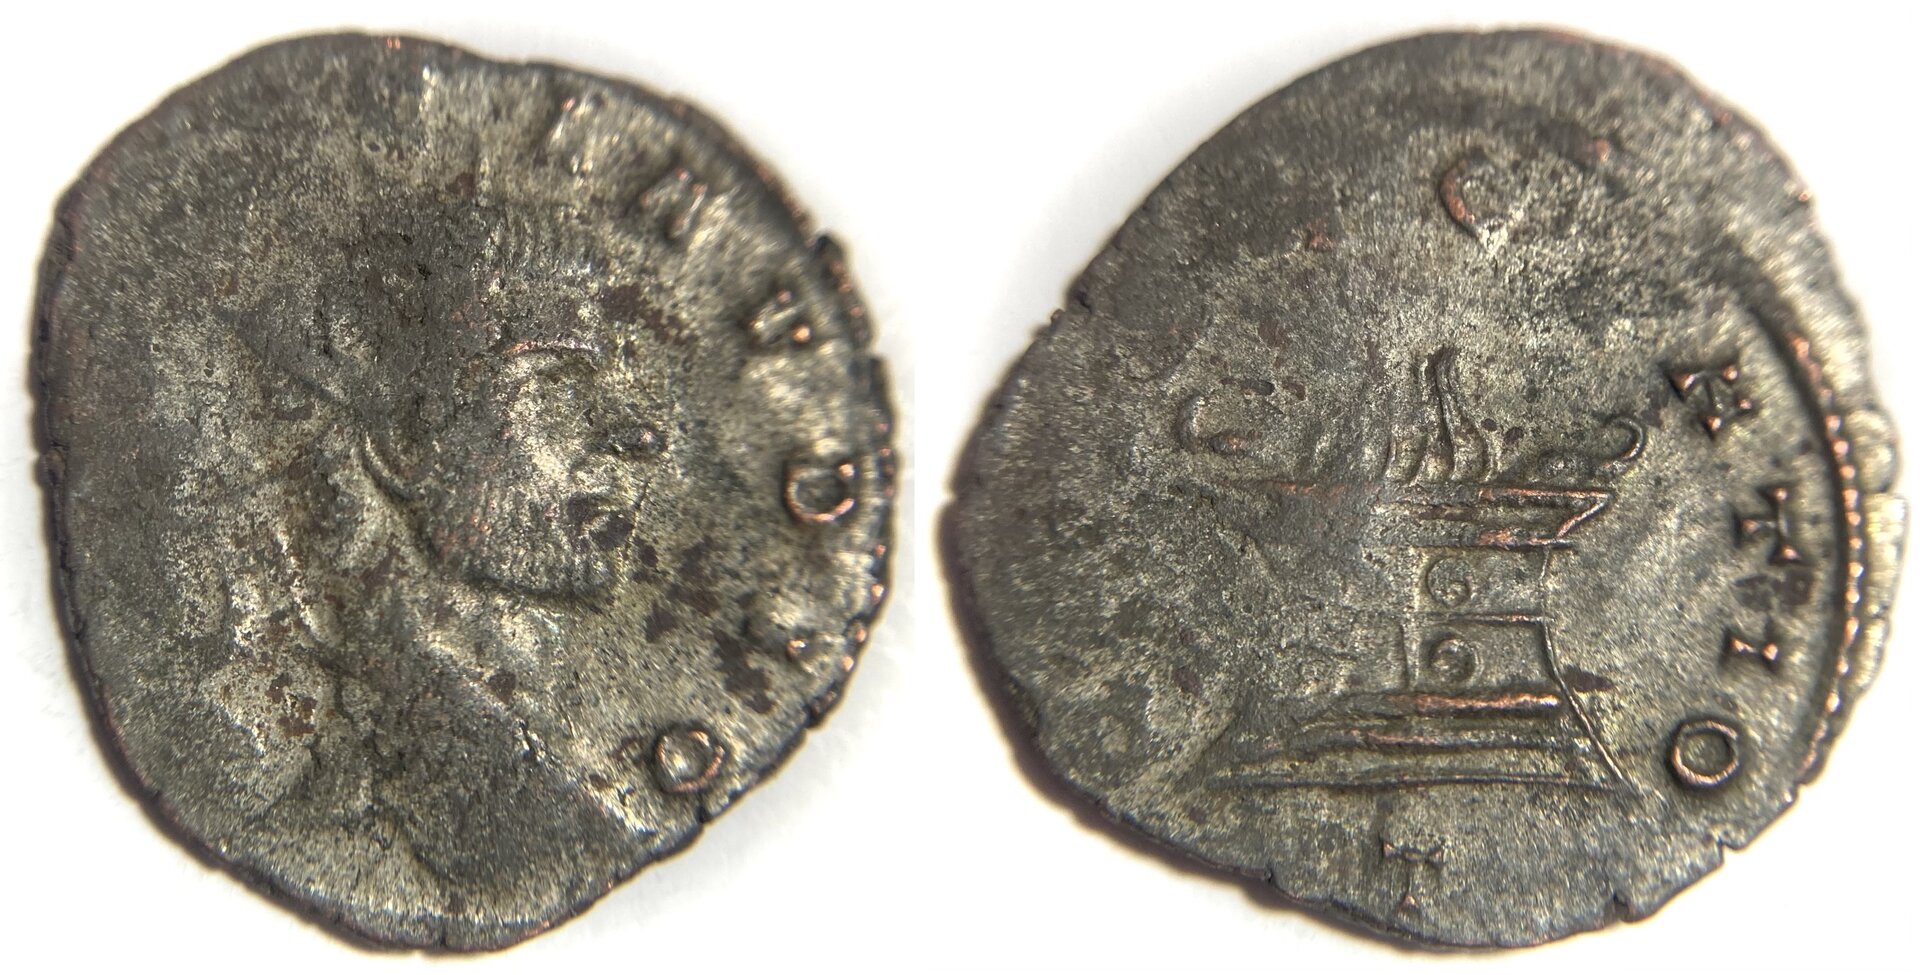 Claudius II RIC Milan 261.JPG